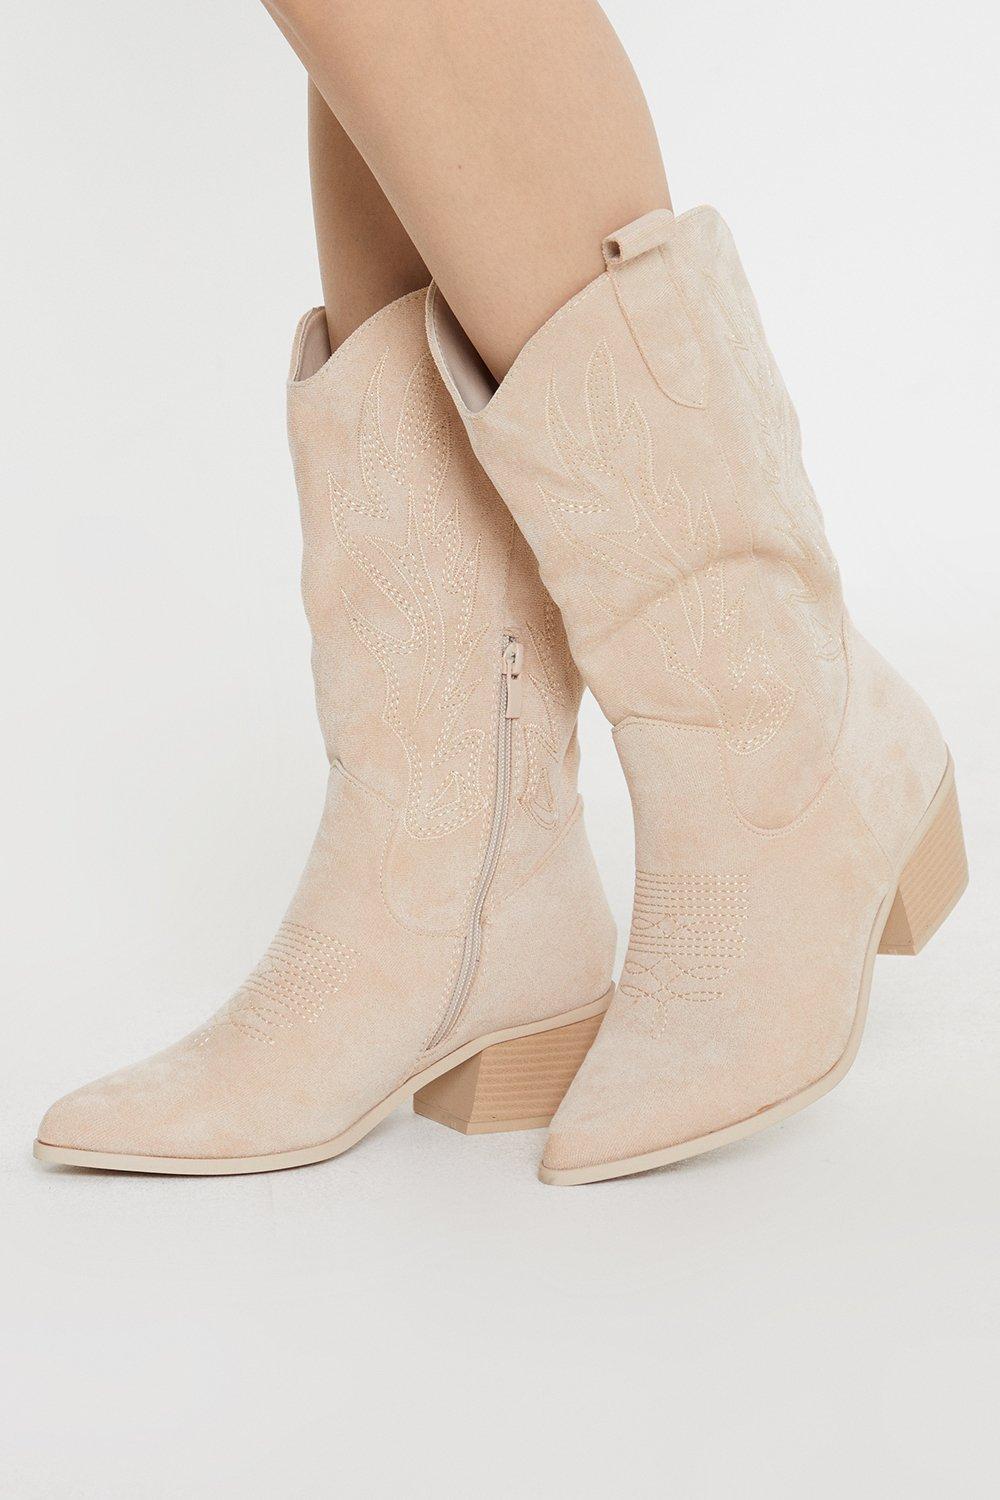 Women’s Kenny Low Heel Stitched Western Knee Boots - beige - 6